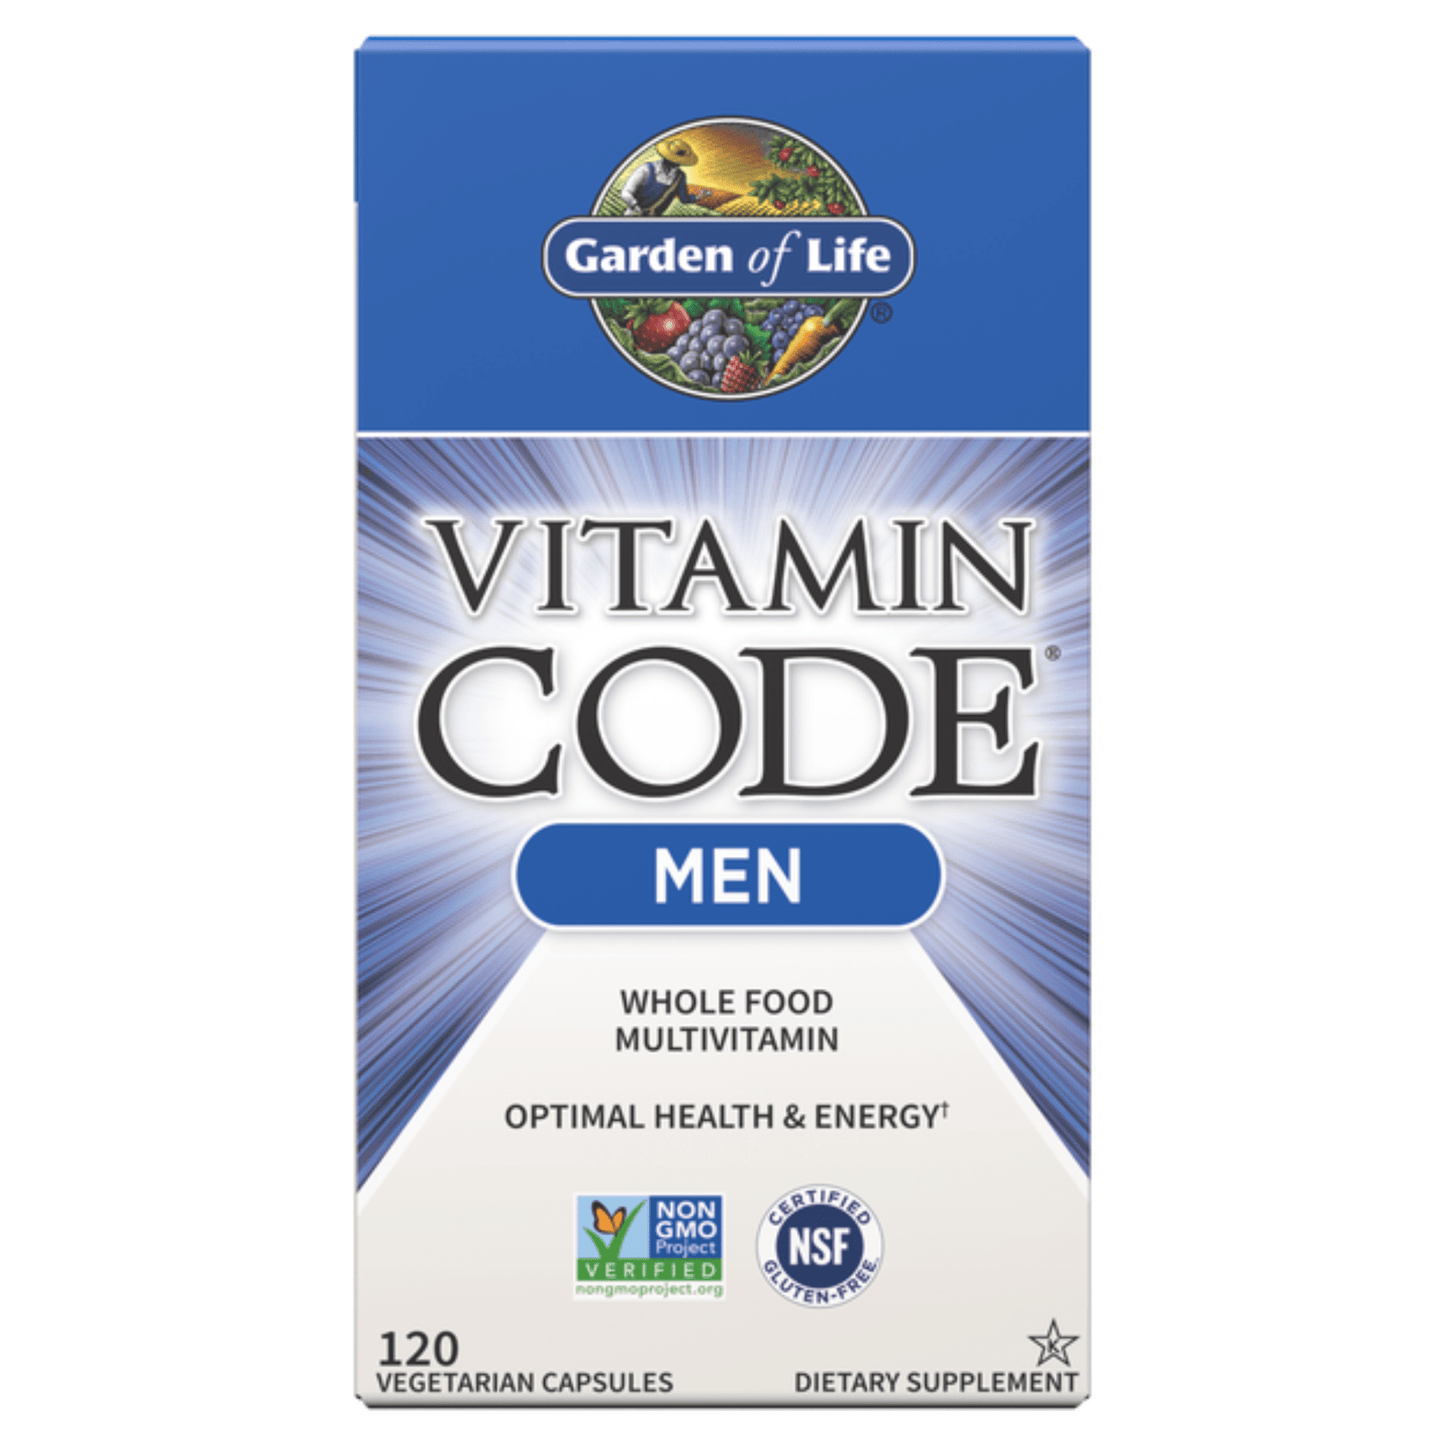 Primary Image of Vitamin Code Men